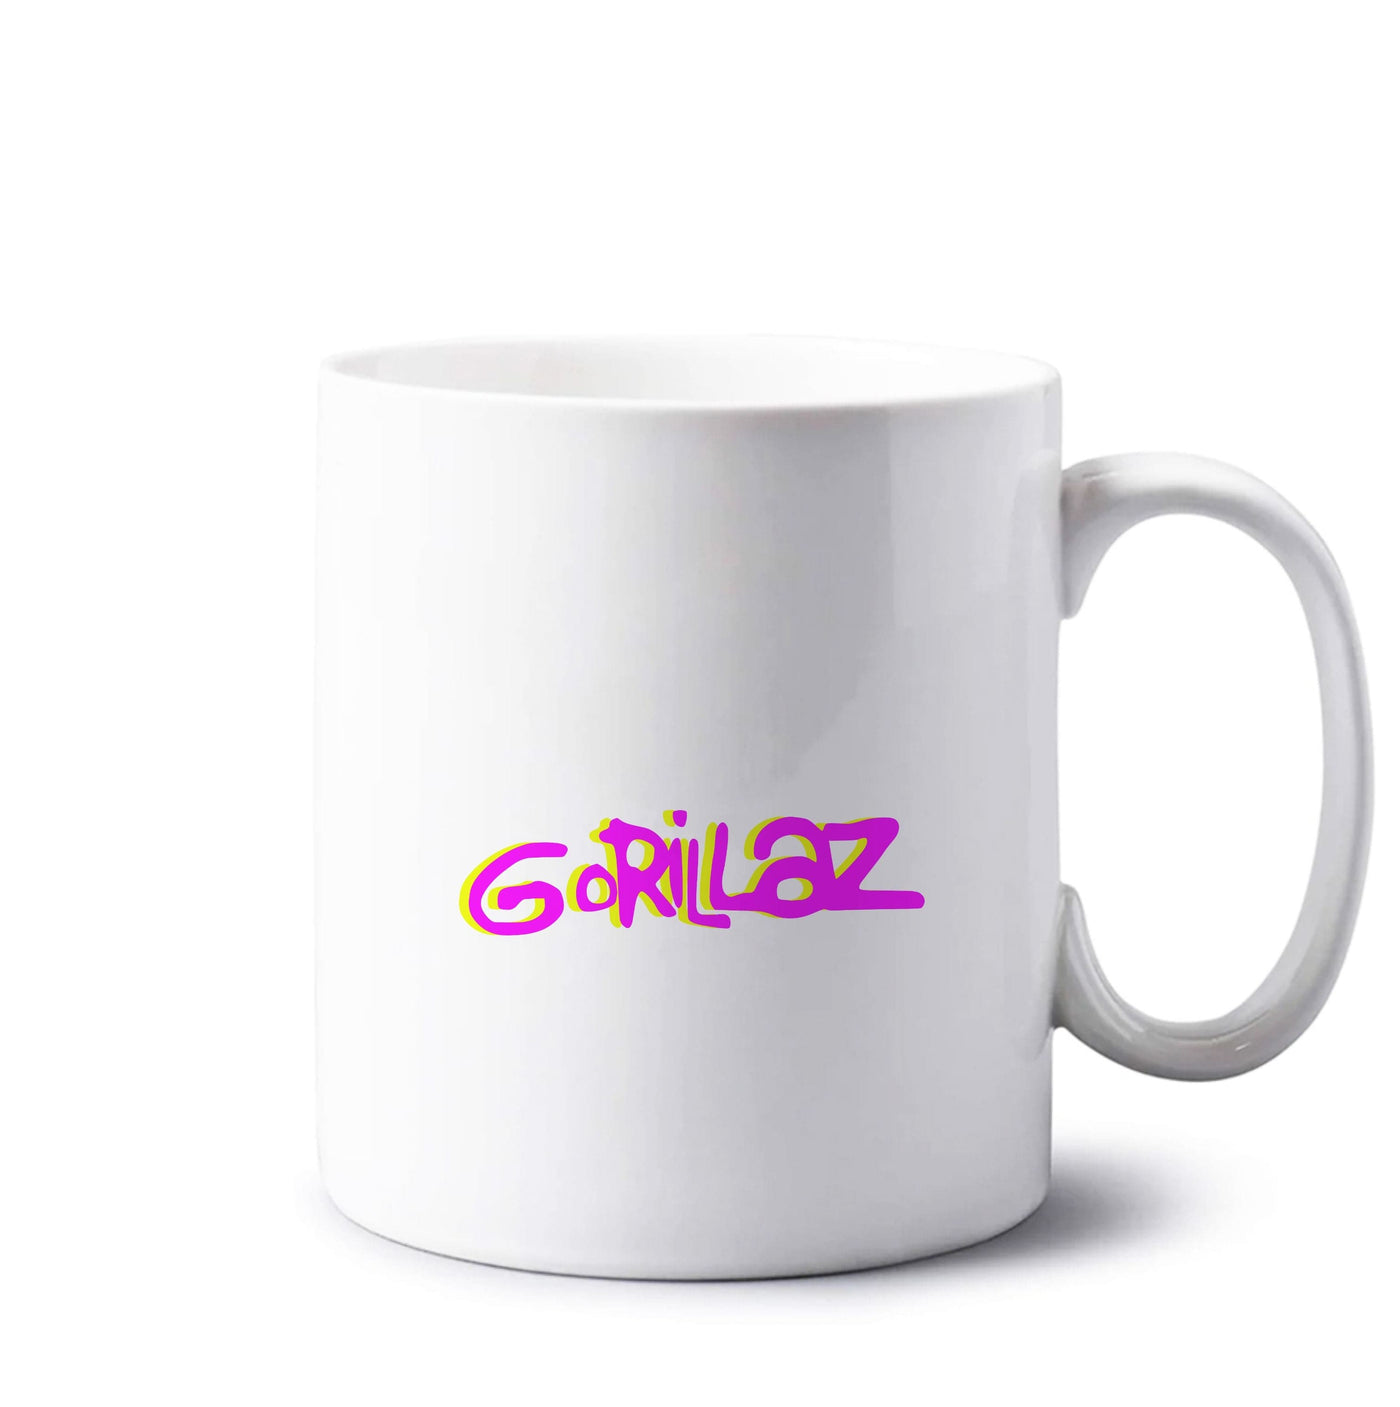 Title - Gorillaz Mug